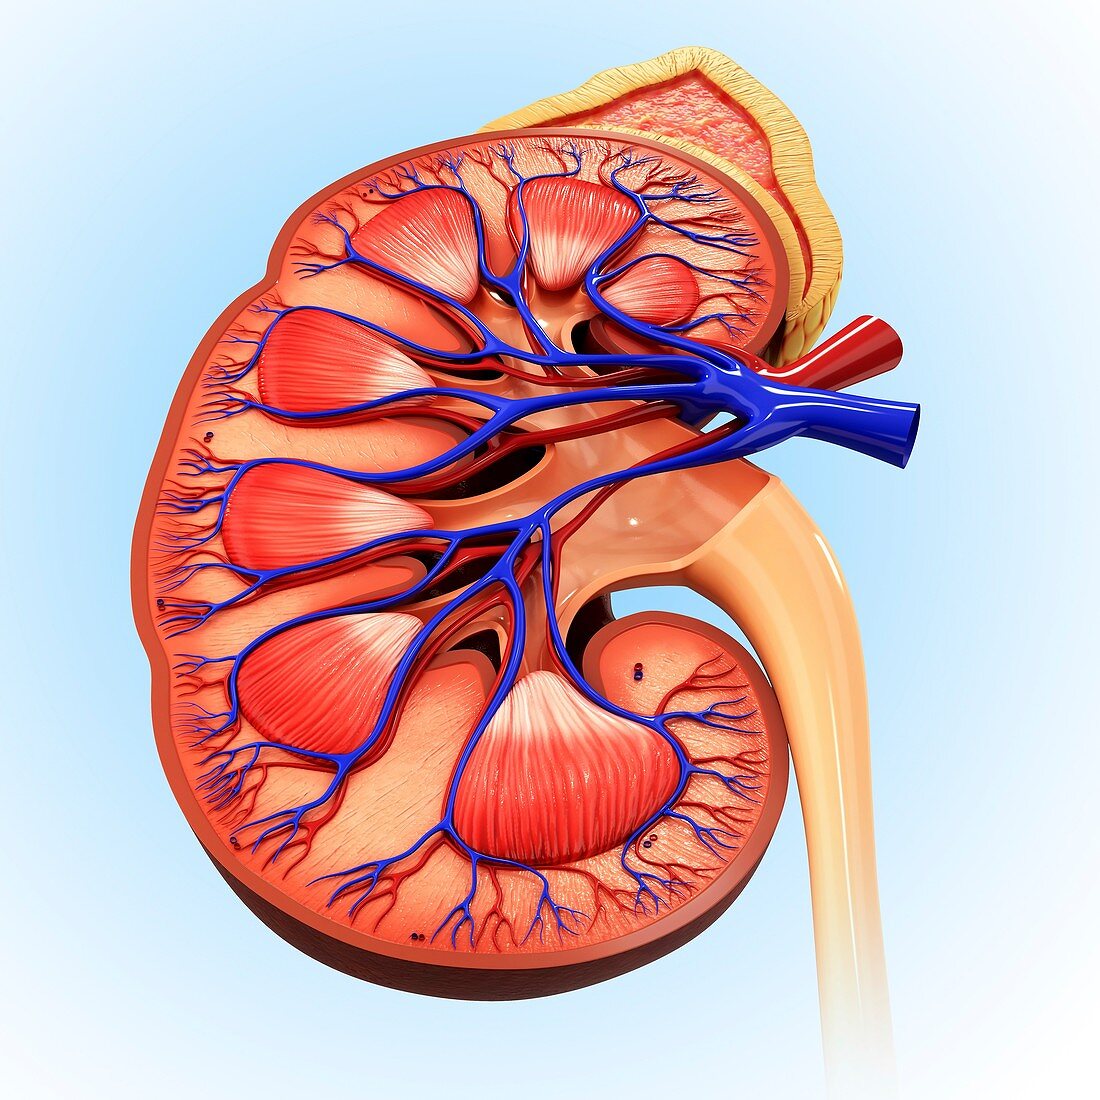 Human kidney,artwork